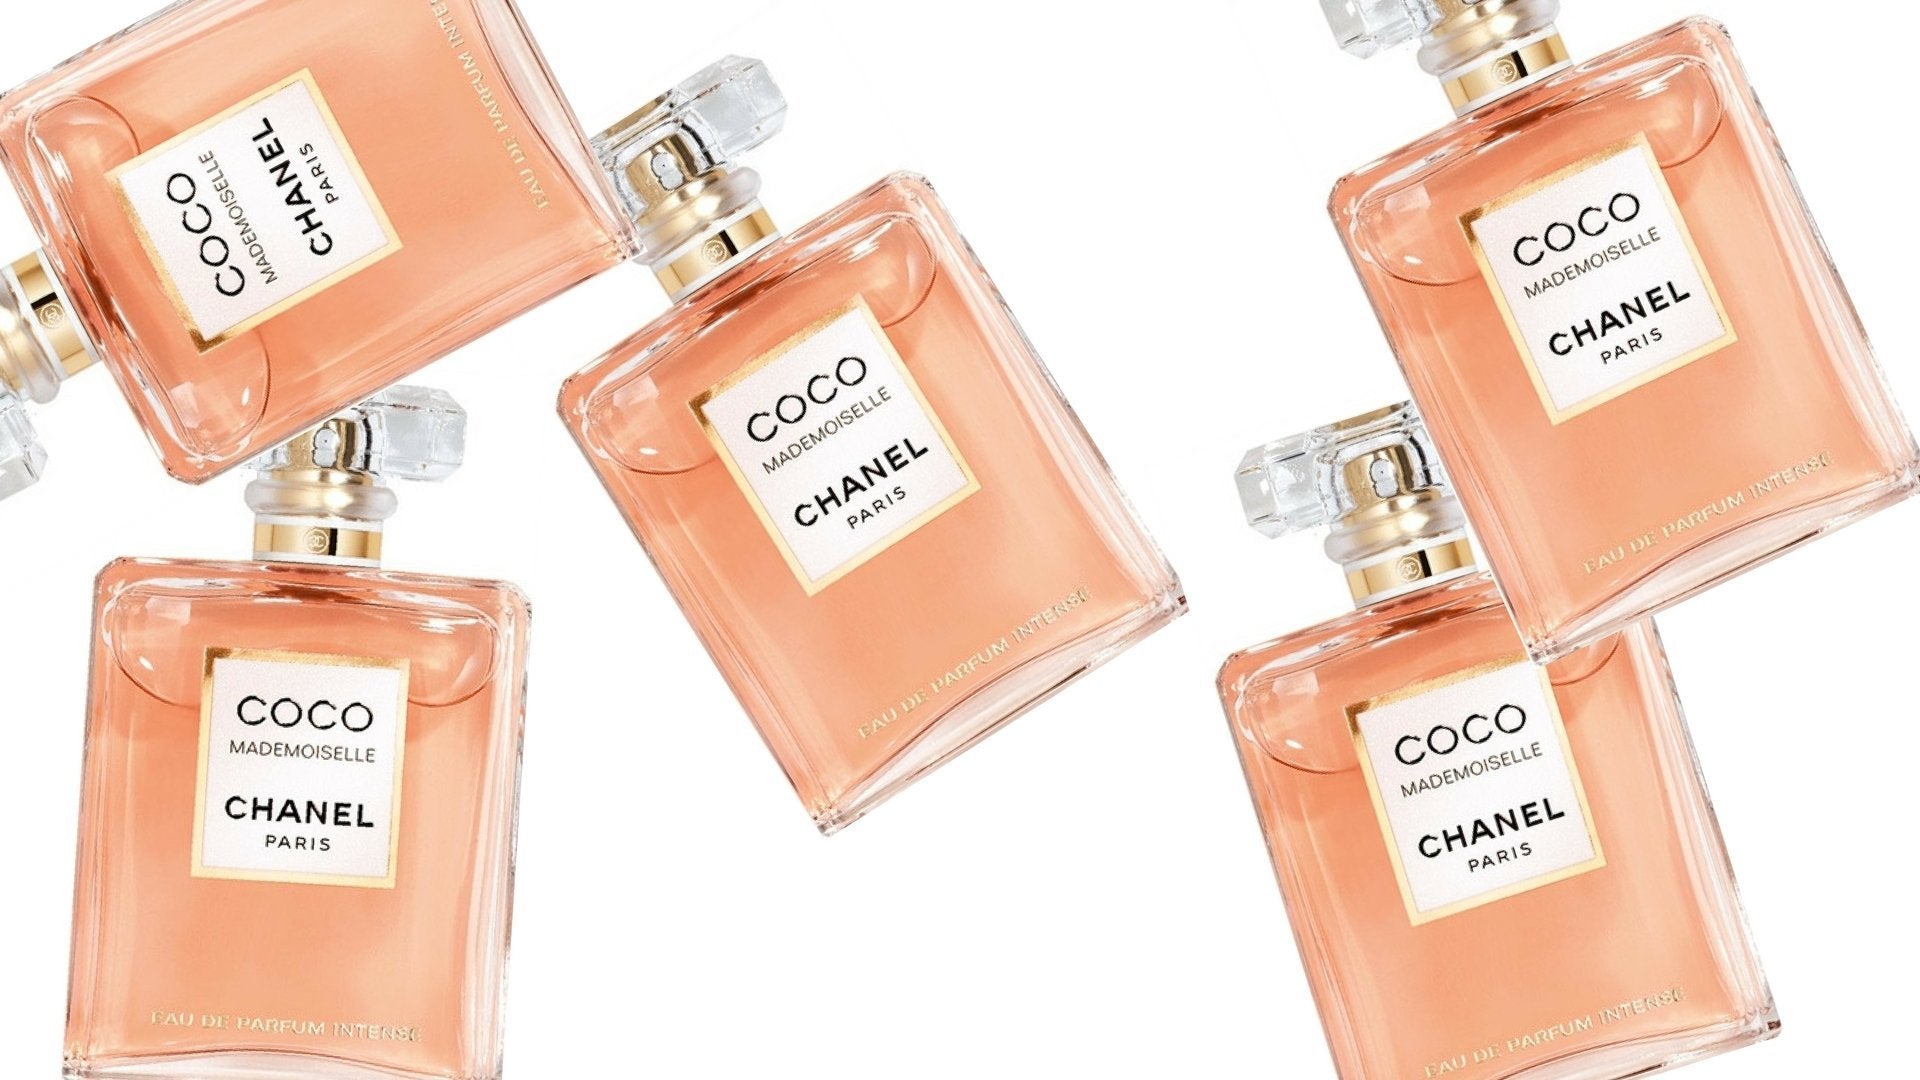 chanel coco perfume women